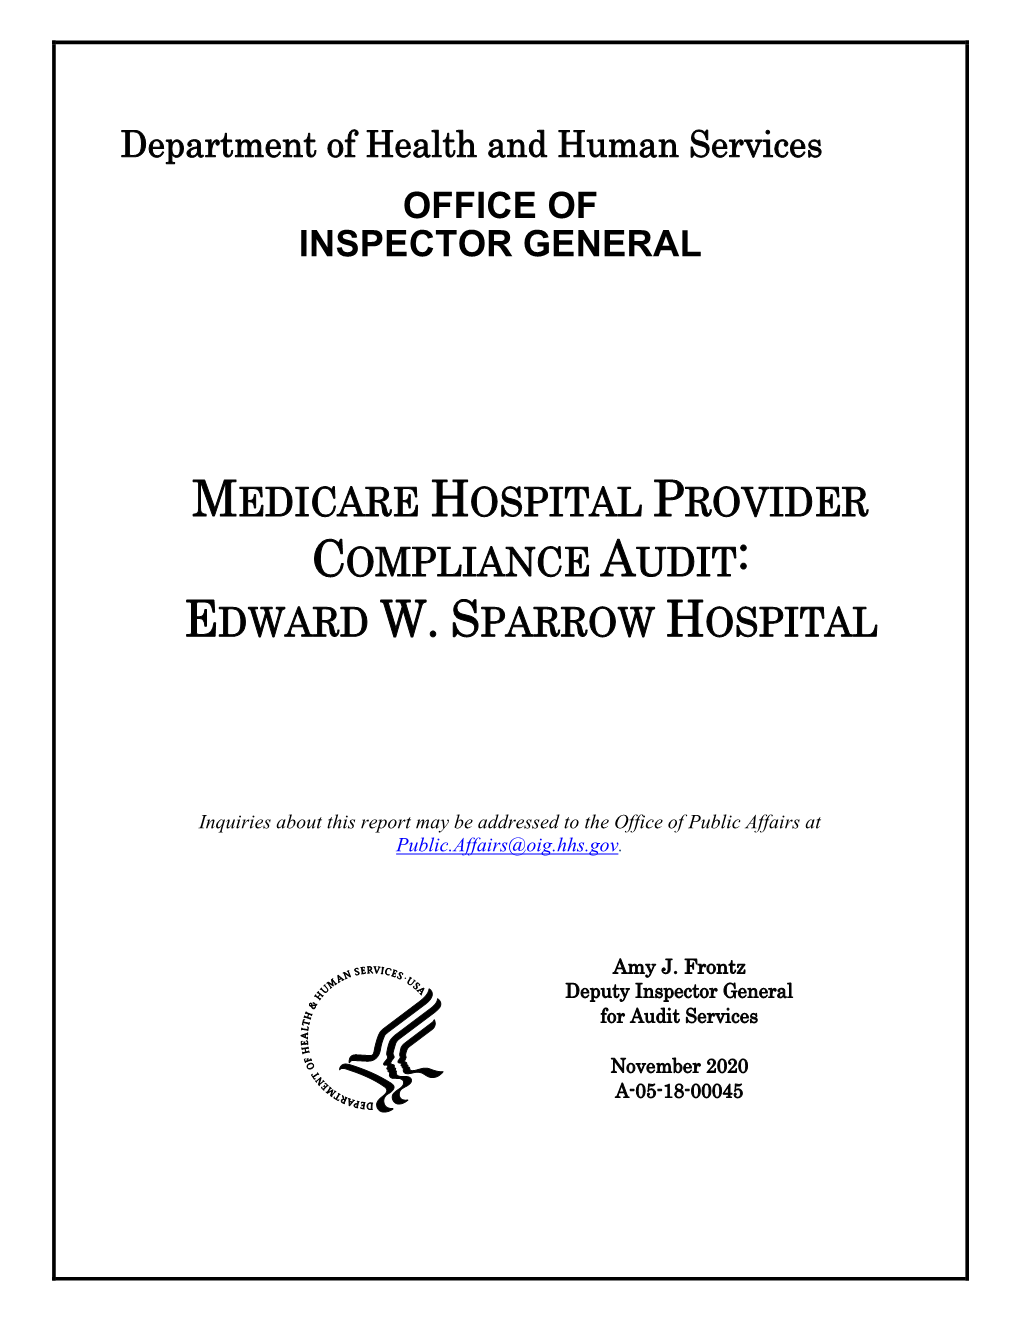 Medicare Hospital Provider Compliance Audit: Edward W. Sparrow Hospital, A-05-18-00045